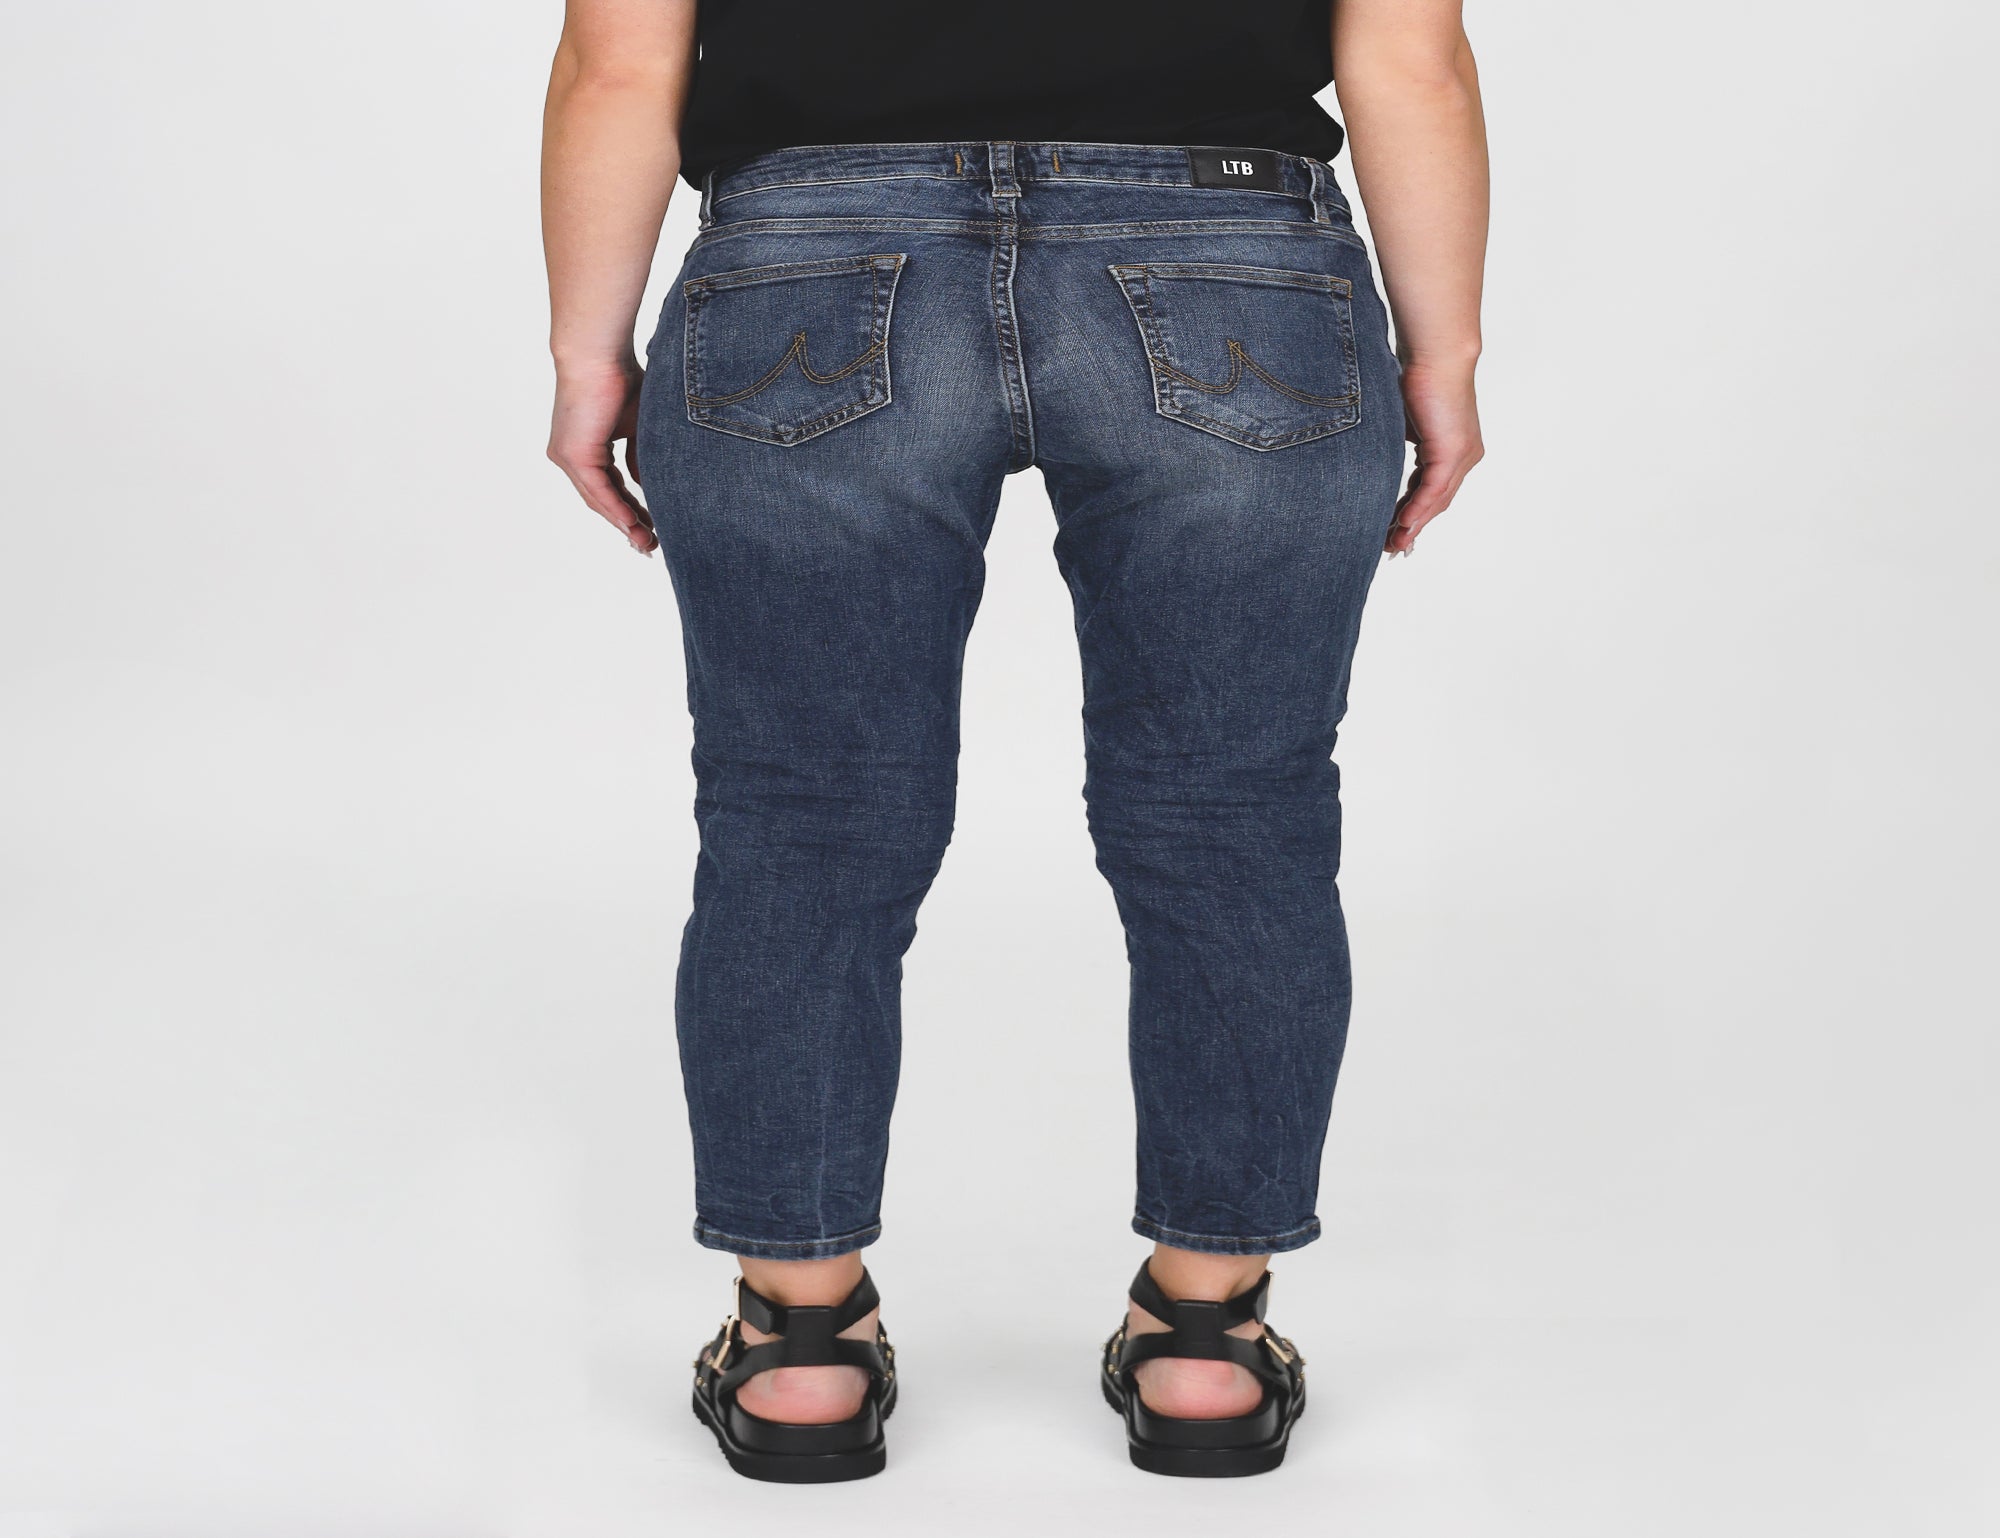 Eliana Morava X Jean - Blue - Pants - Full Length - Women's Clothing ...